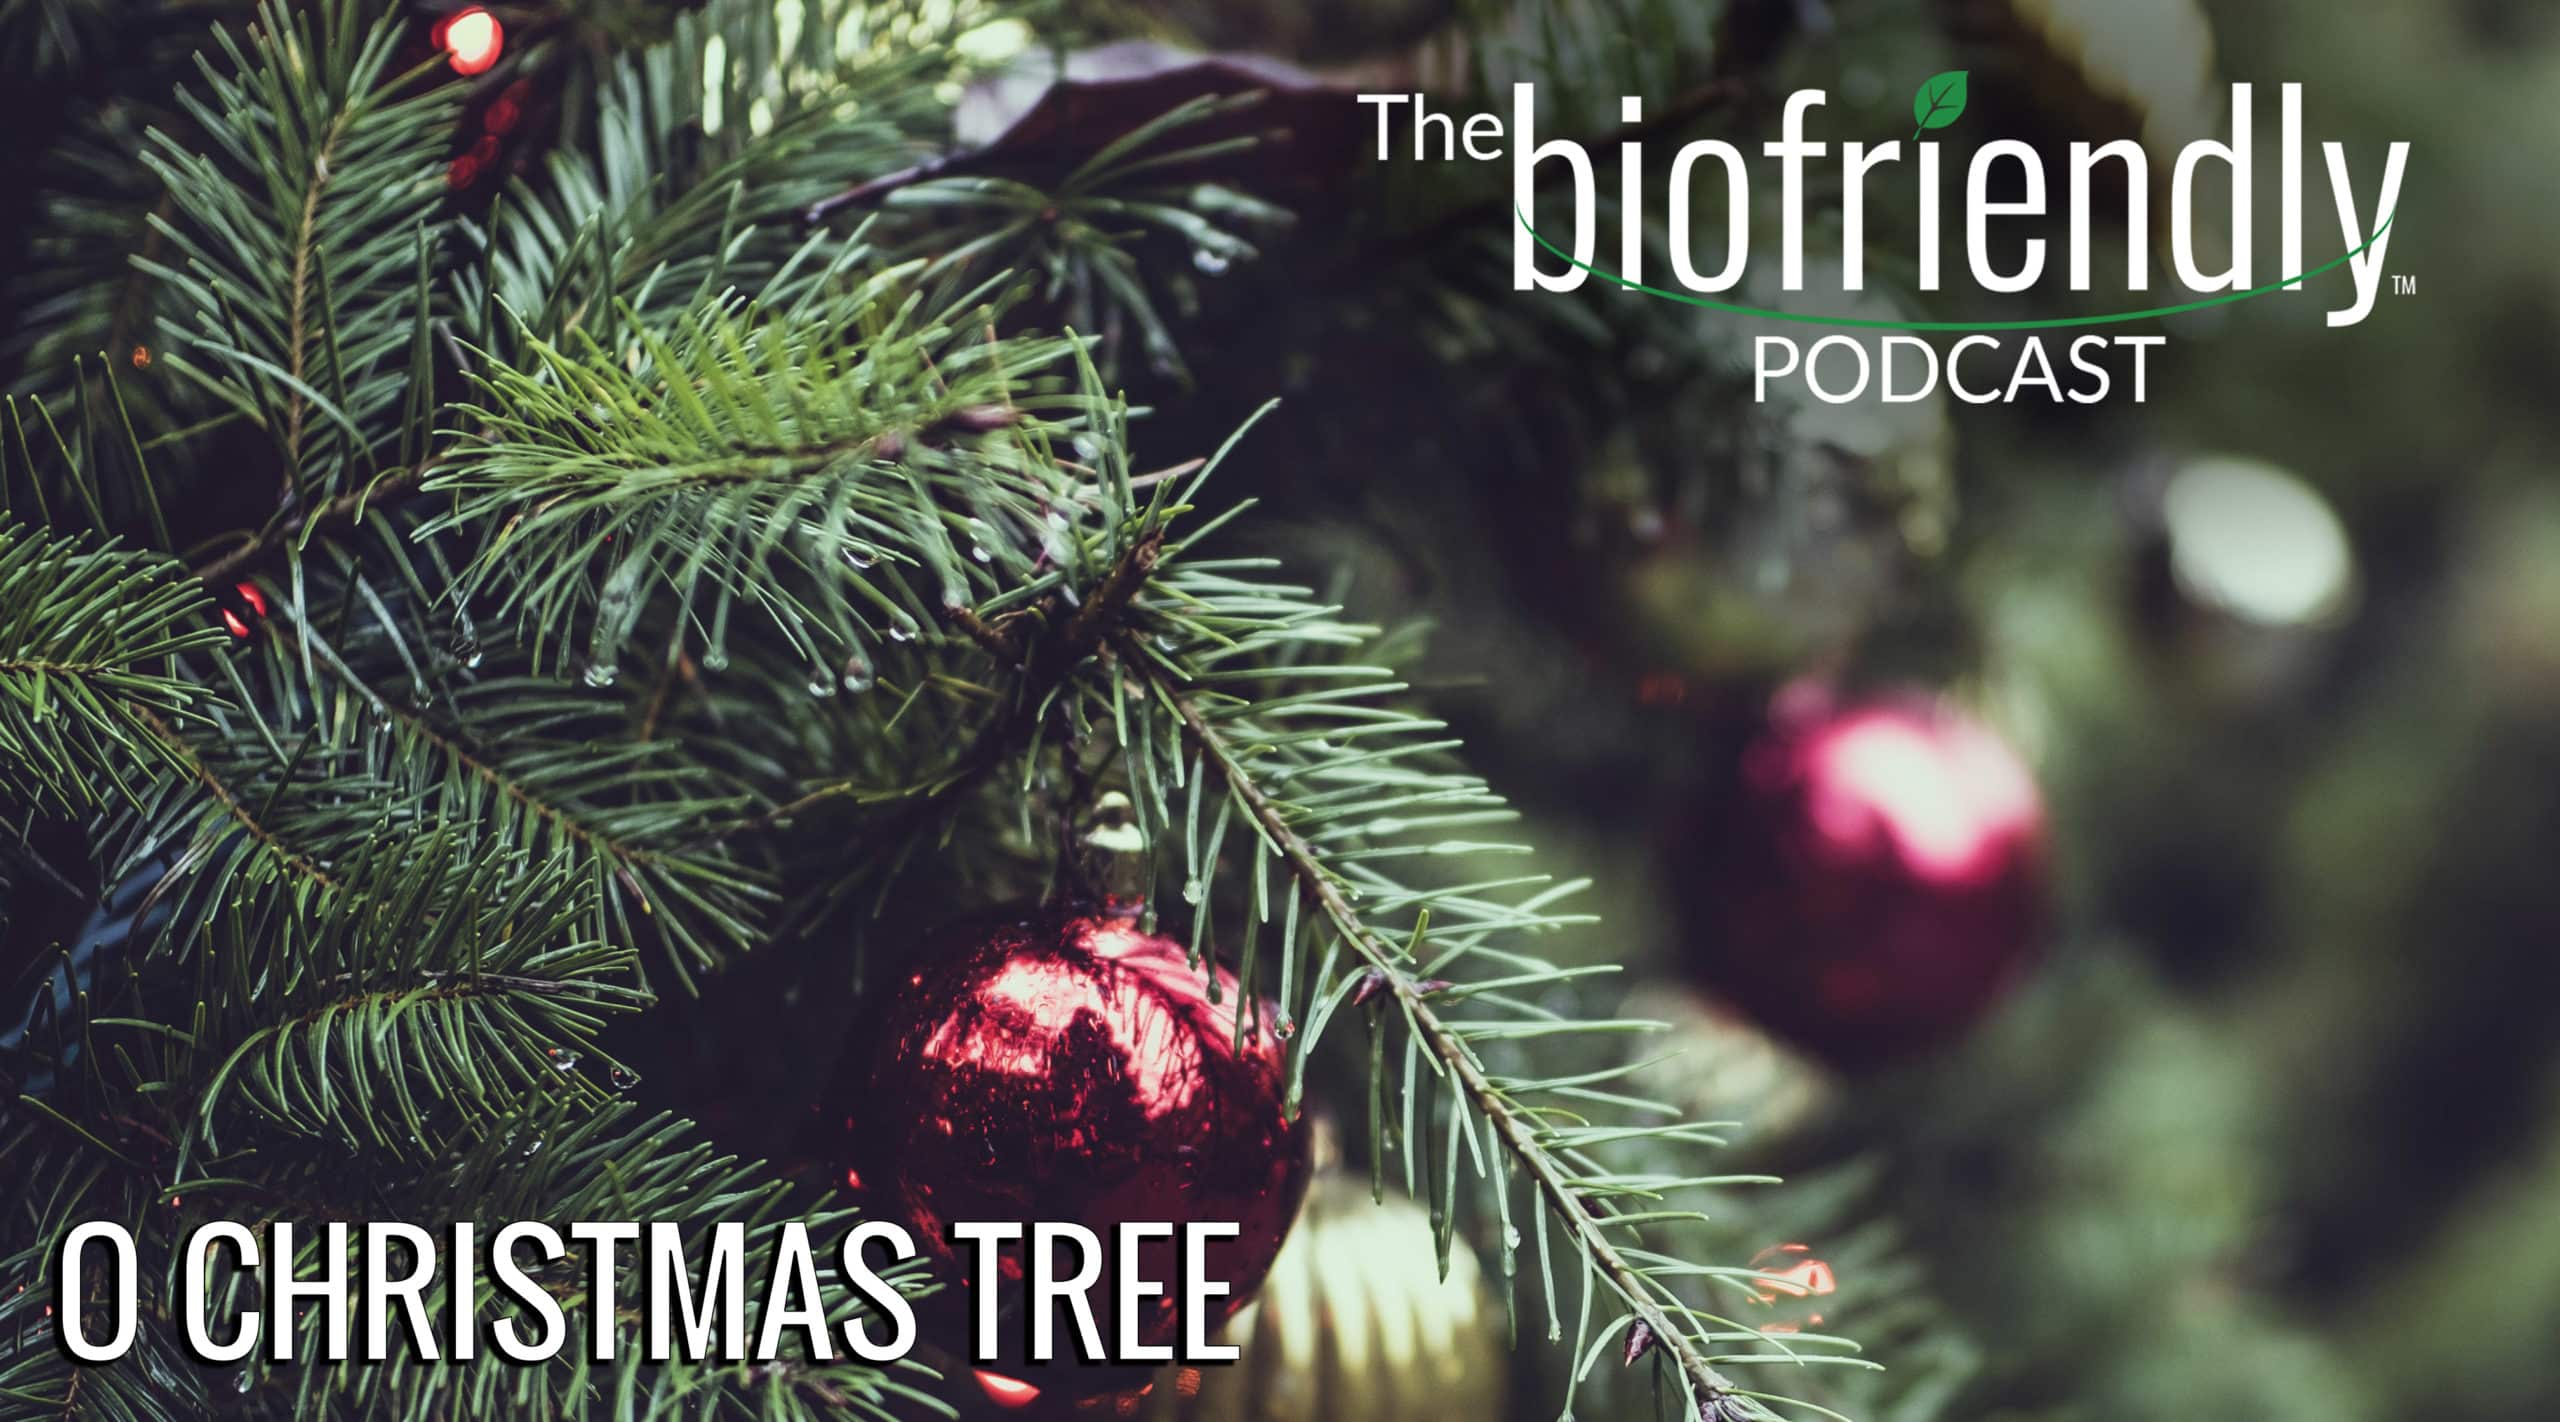 The Biofriendly Podcast - Episode 41 - O Christmas Tree